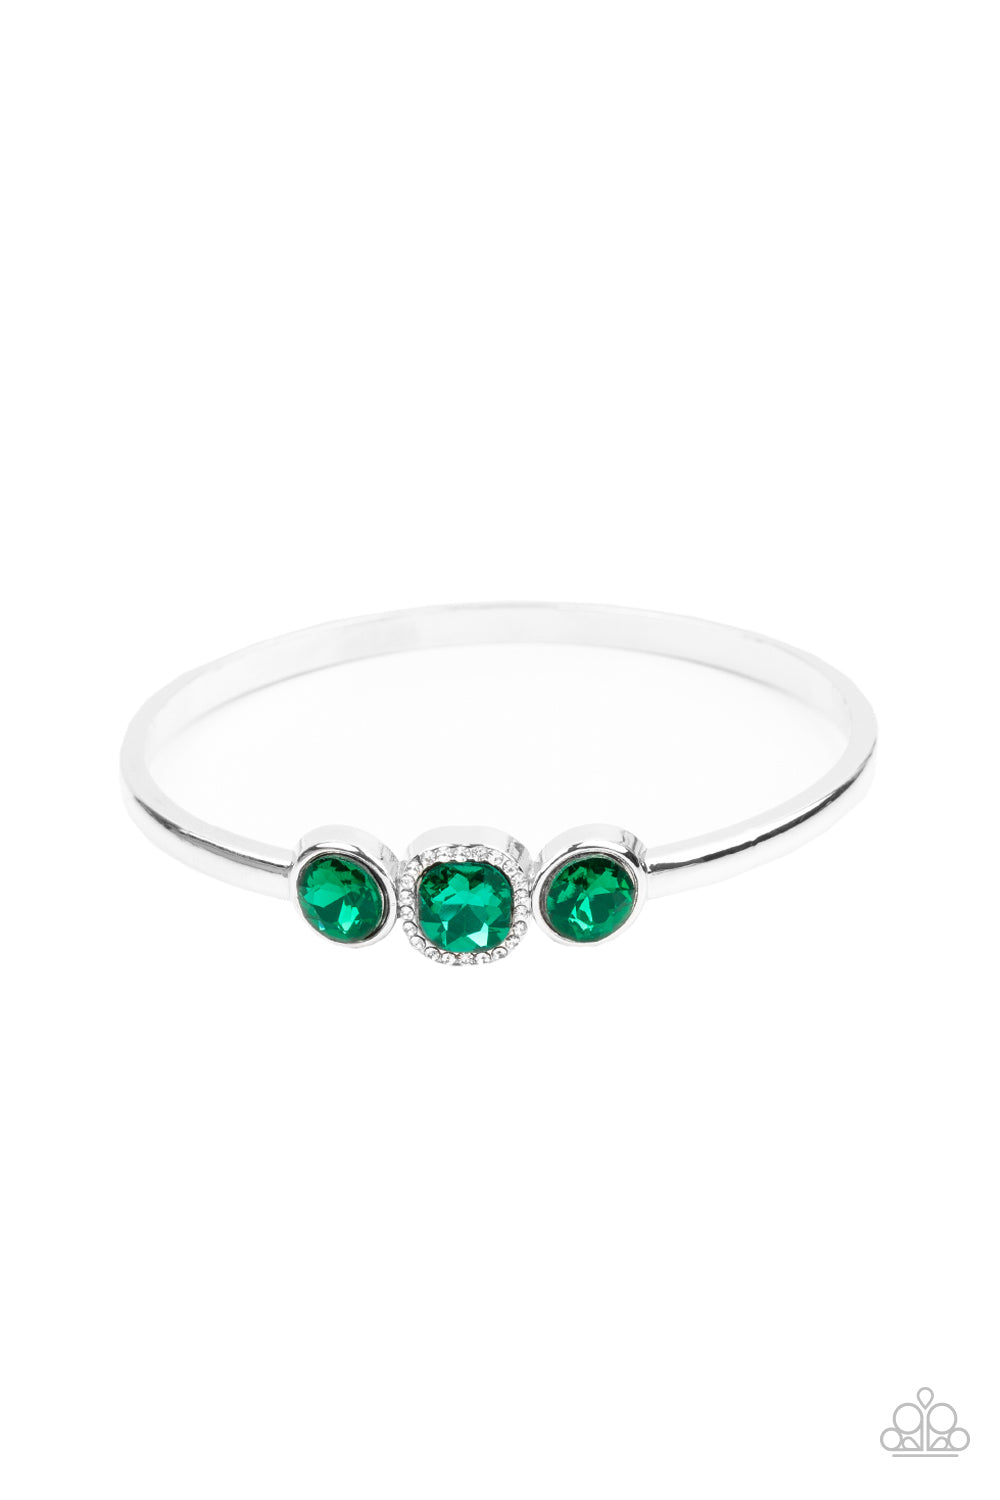 Royal Demands - Green Bracelet - Paparazzi Accessories - Alies Bling Bar